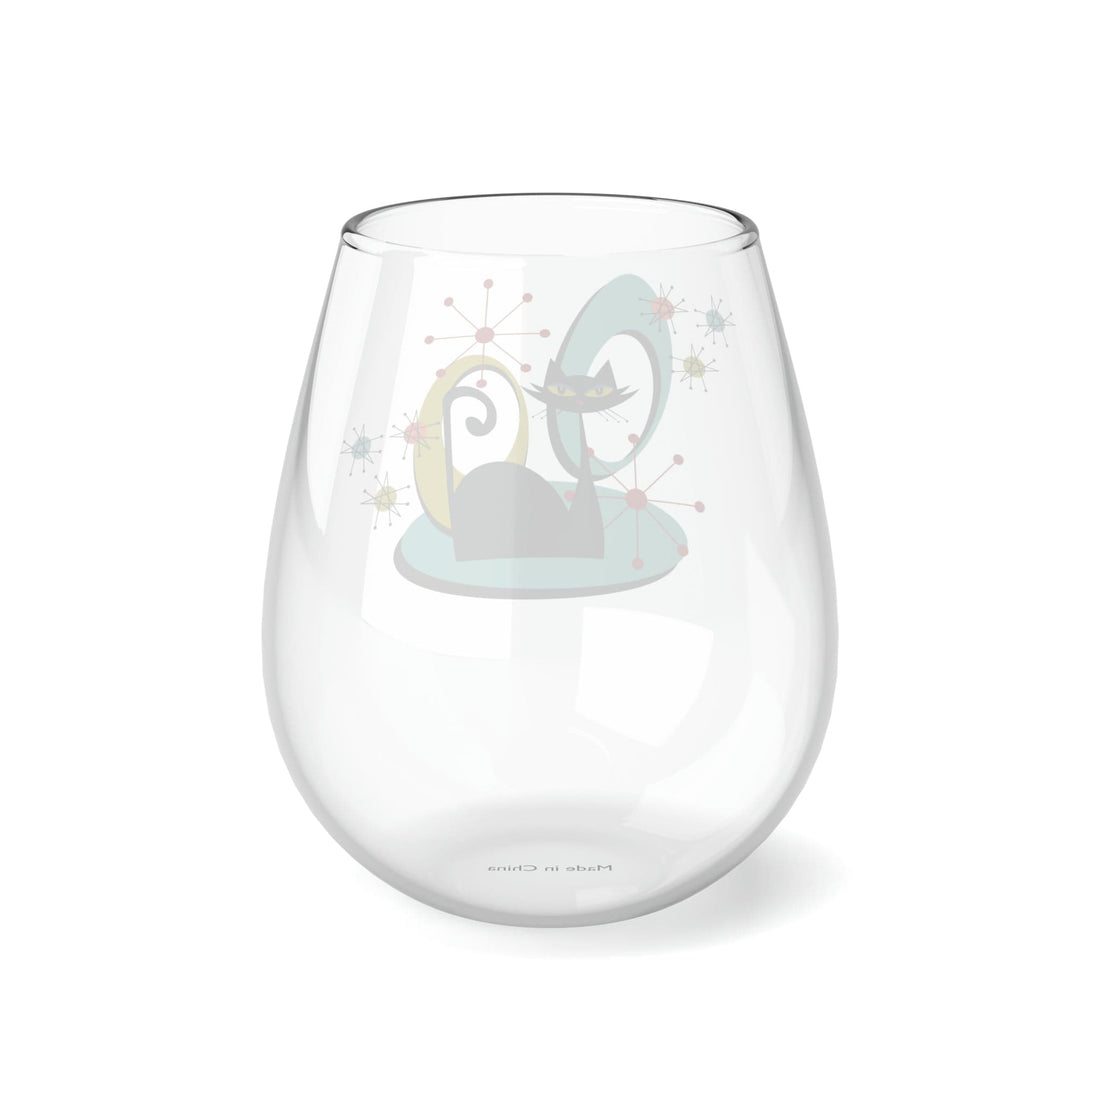 Kate McEnroe New York Mid Century Modern Atomic Cat Stemless Wine Glass, 11.75oz Retro Whimsical Sipware, MCM Kitschy DrinkwareWine Glasses21338189572524477717